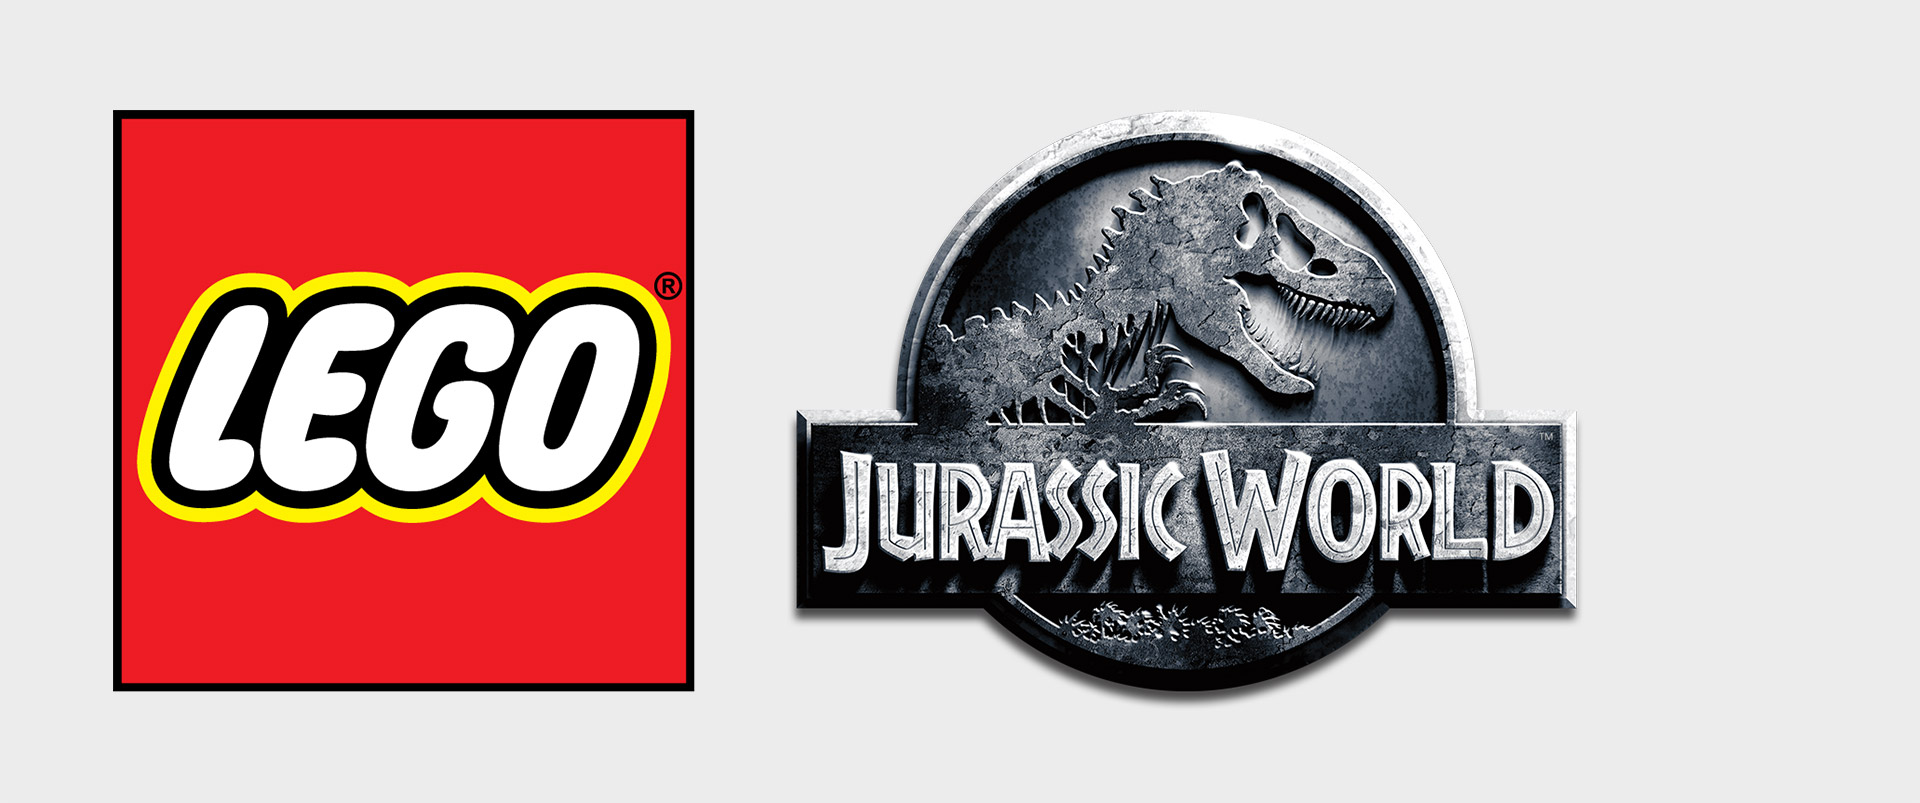 LEGO Jurassic world